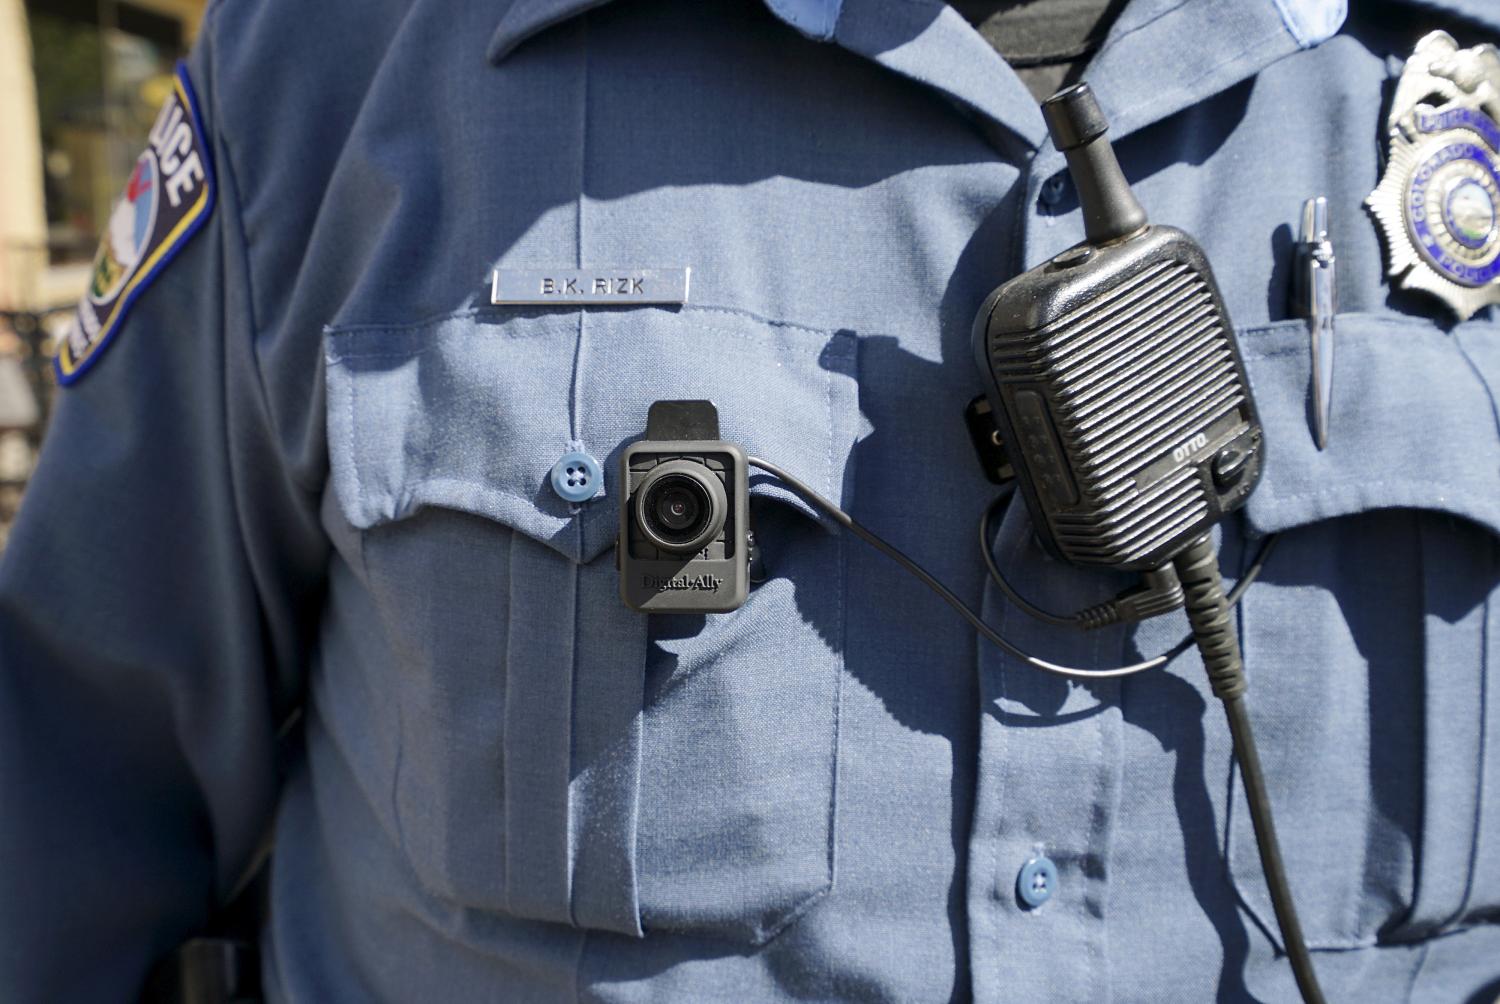 Do body-worn cameras improve police behavior?